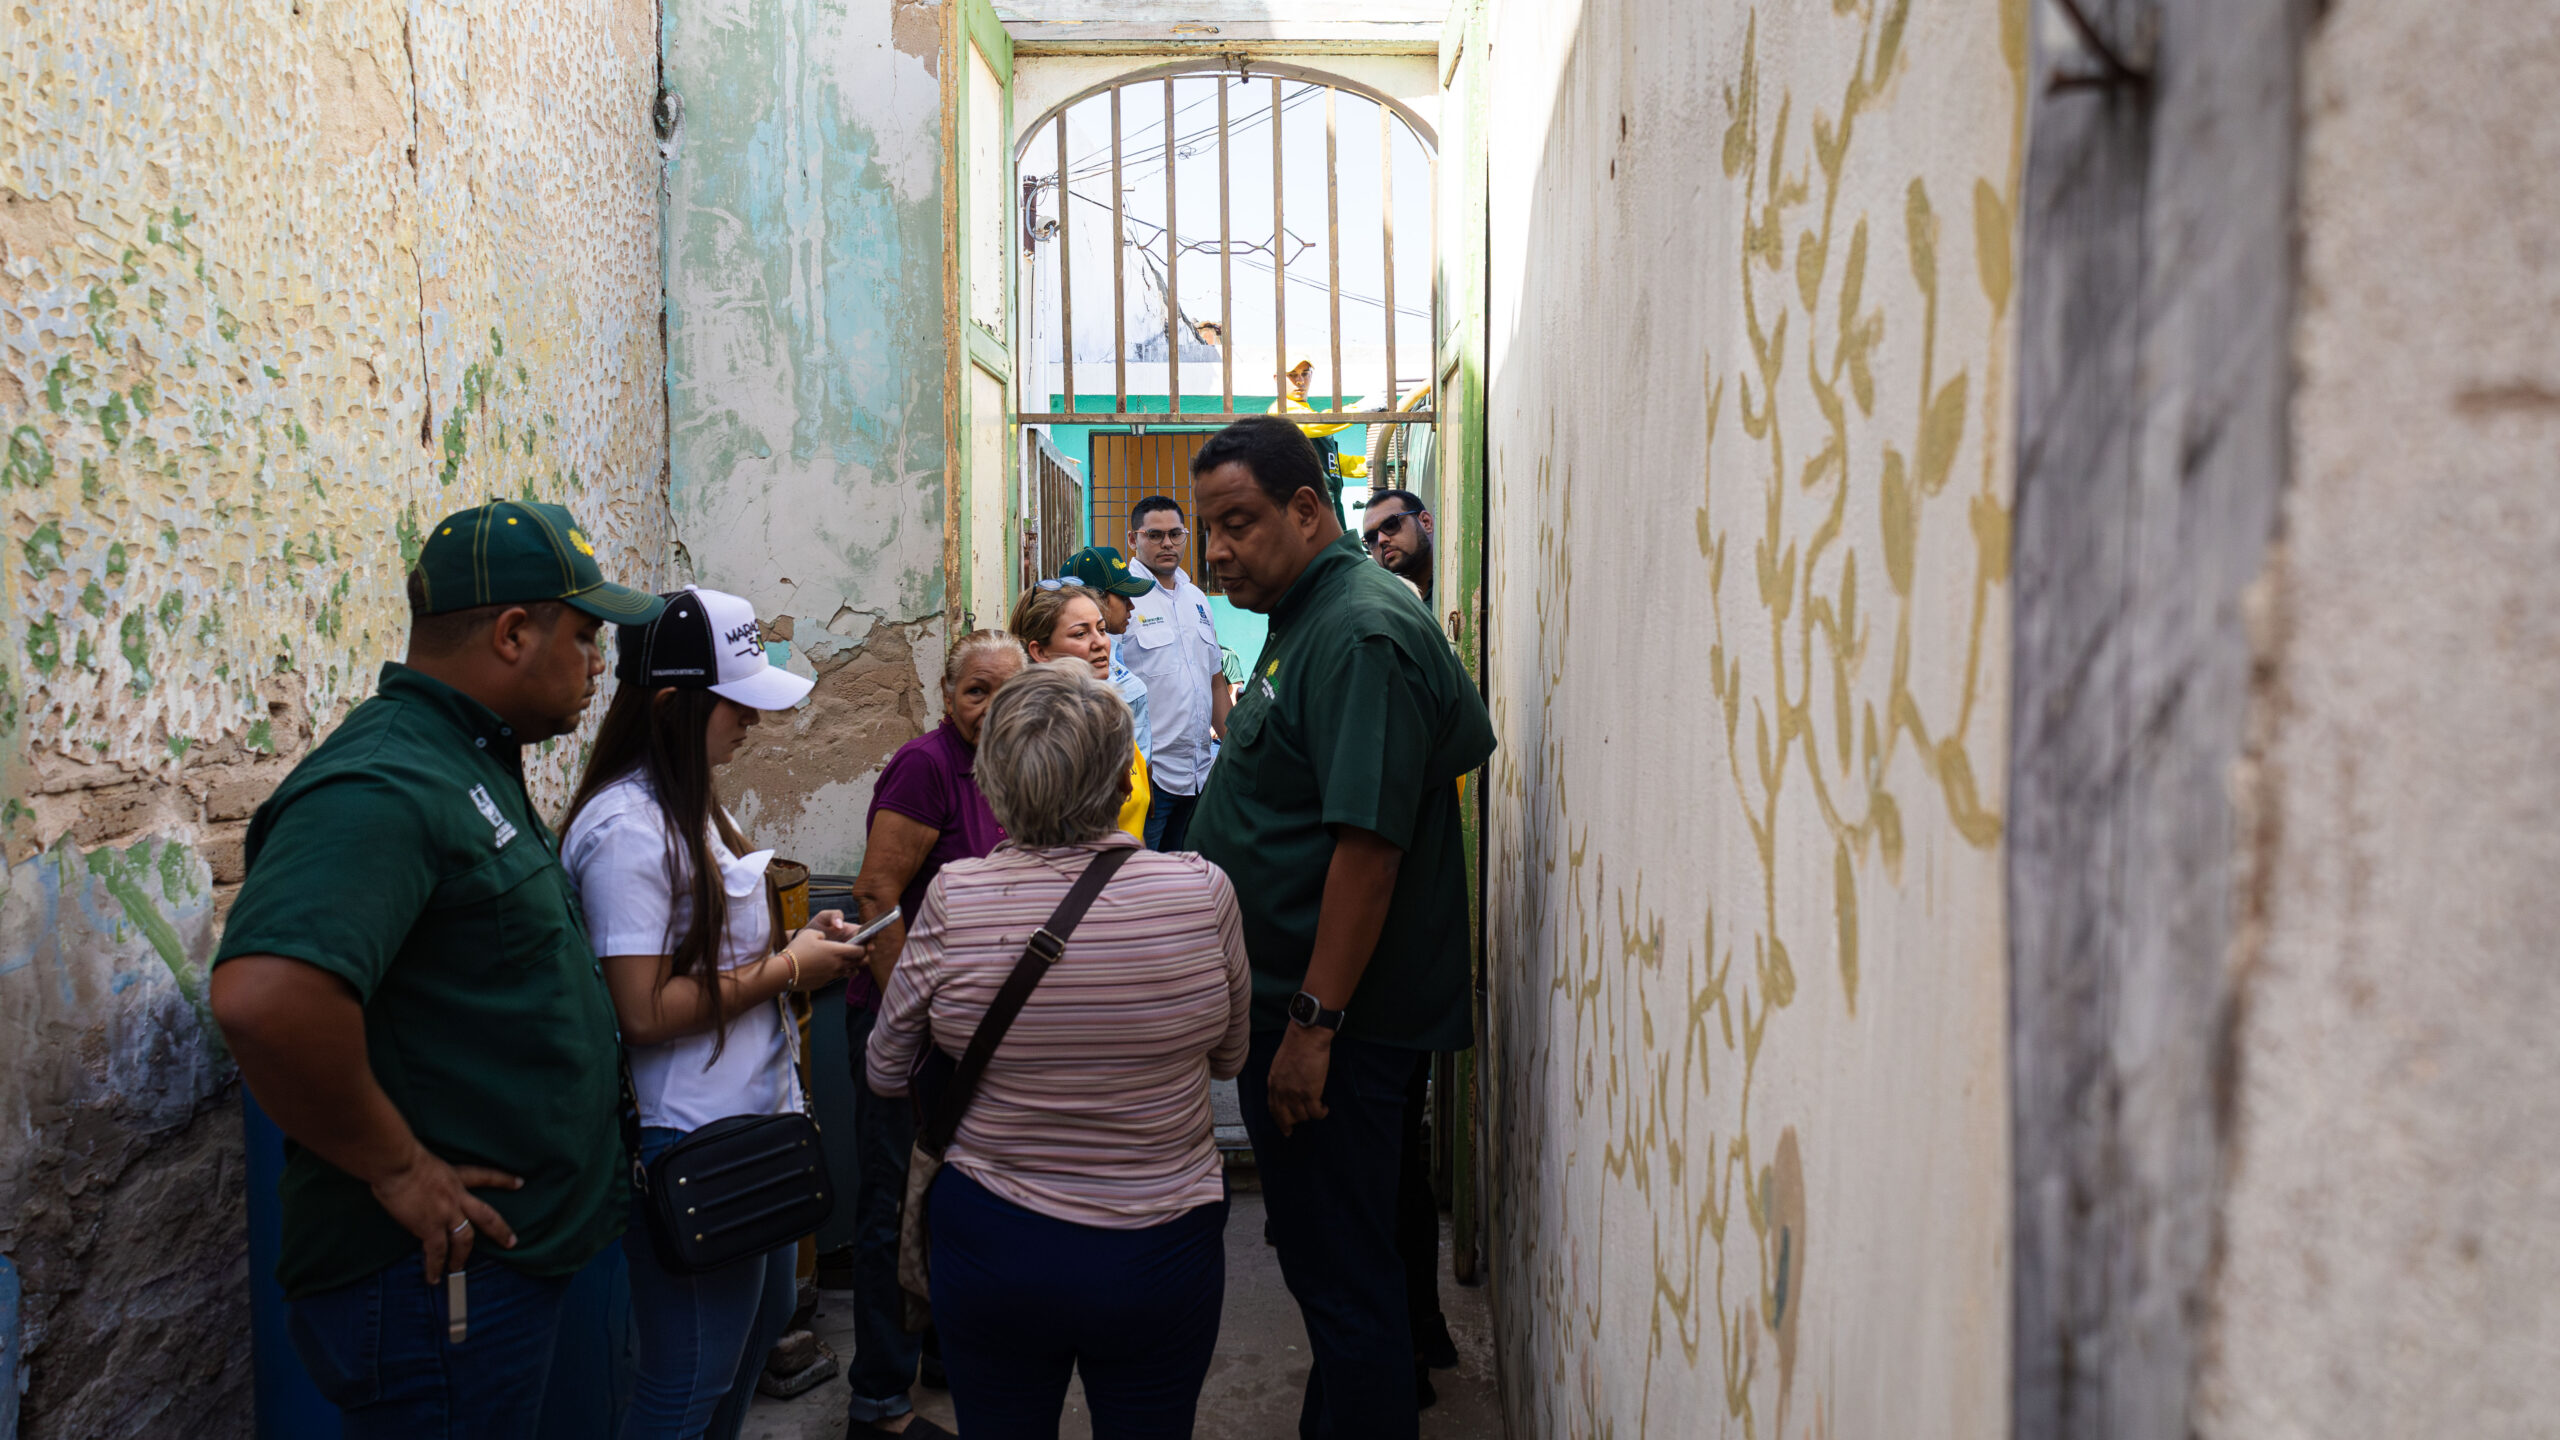 Alcaldía de Maracaibo benefició a más de 30 familias con la distribución de agua gratuita por cisterna en Santa Lucía